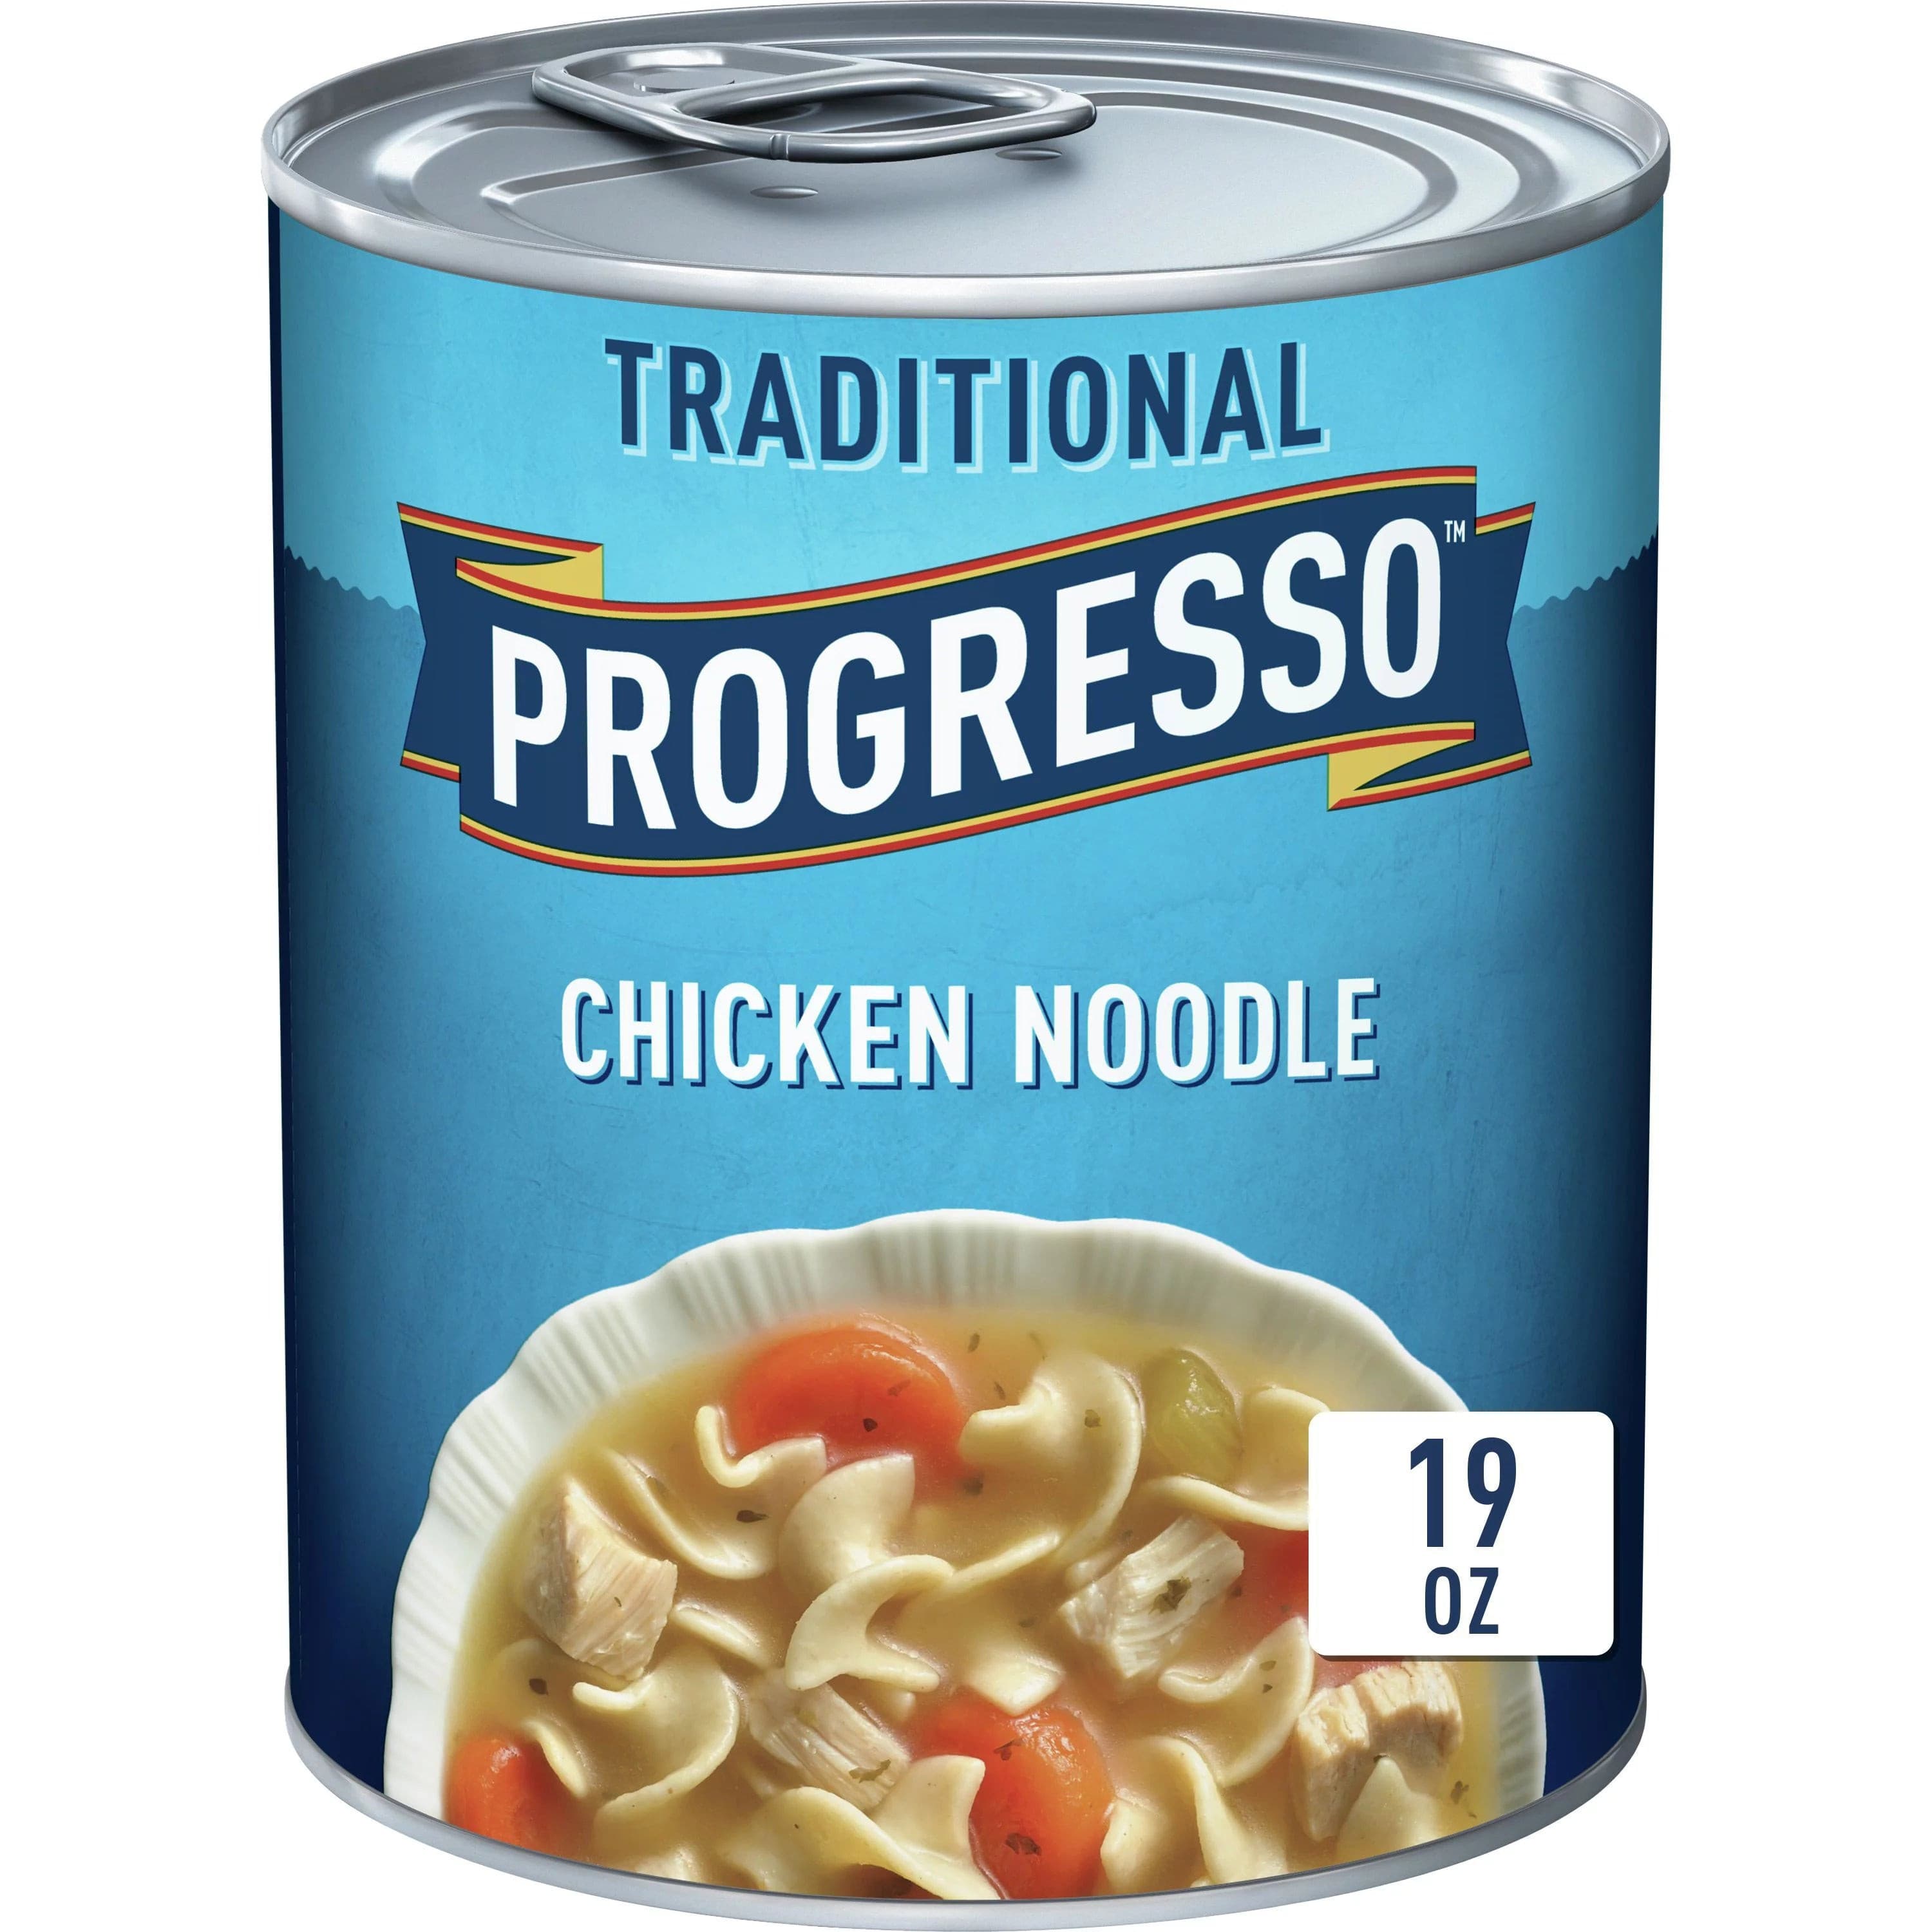 Progresso Traditional, Chicken Noodle Soup, 19 oz..